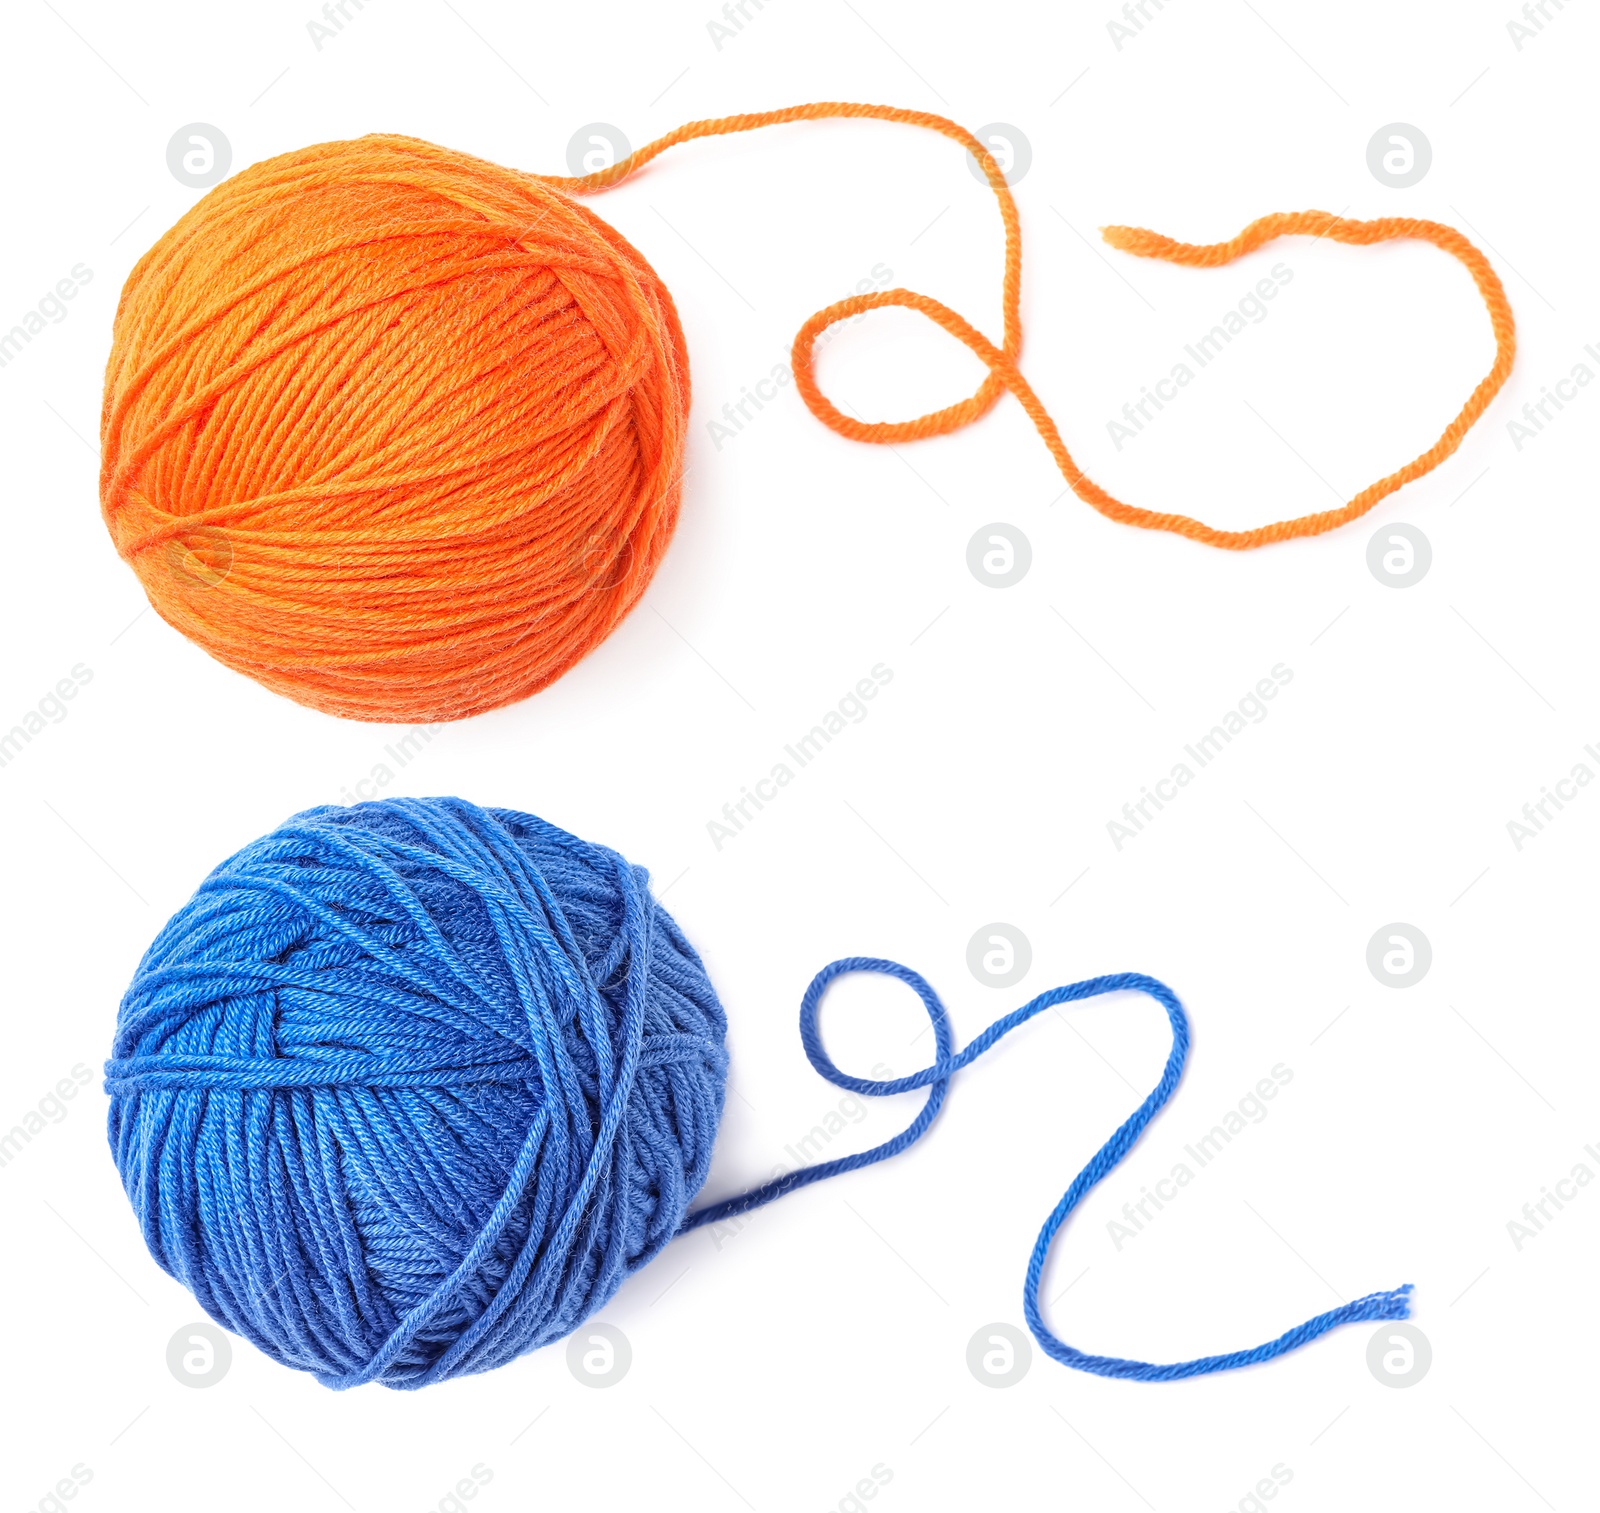 Image of Orange and blue woolen yarns on white background 